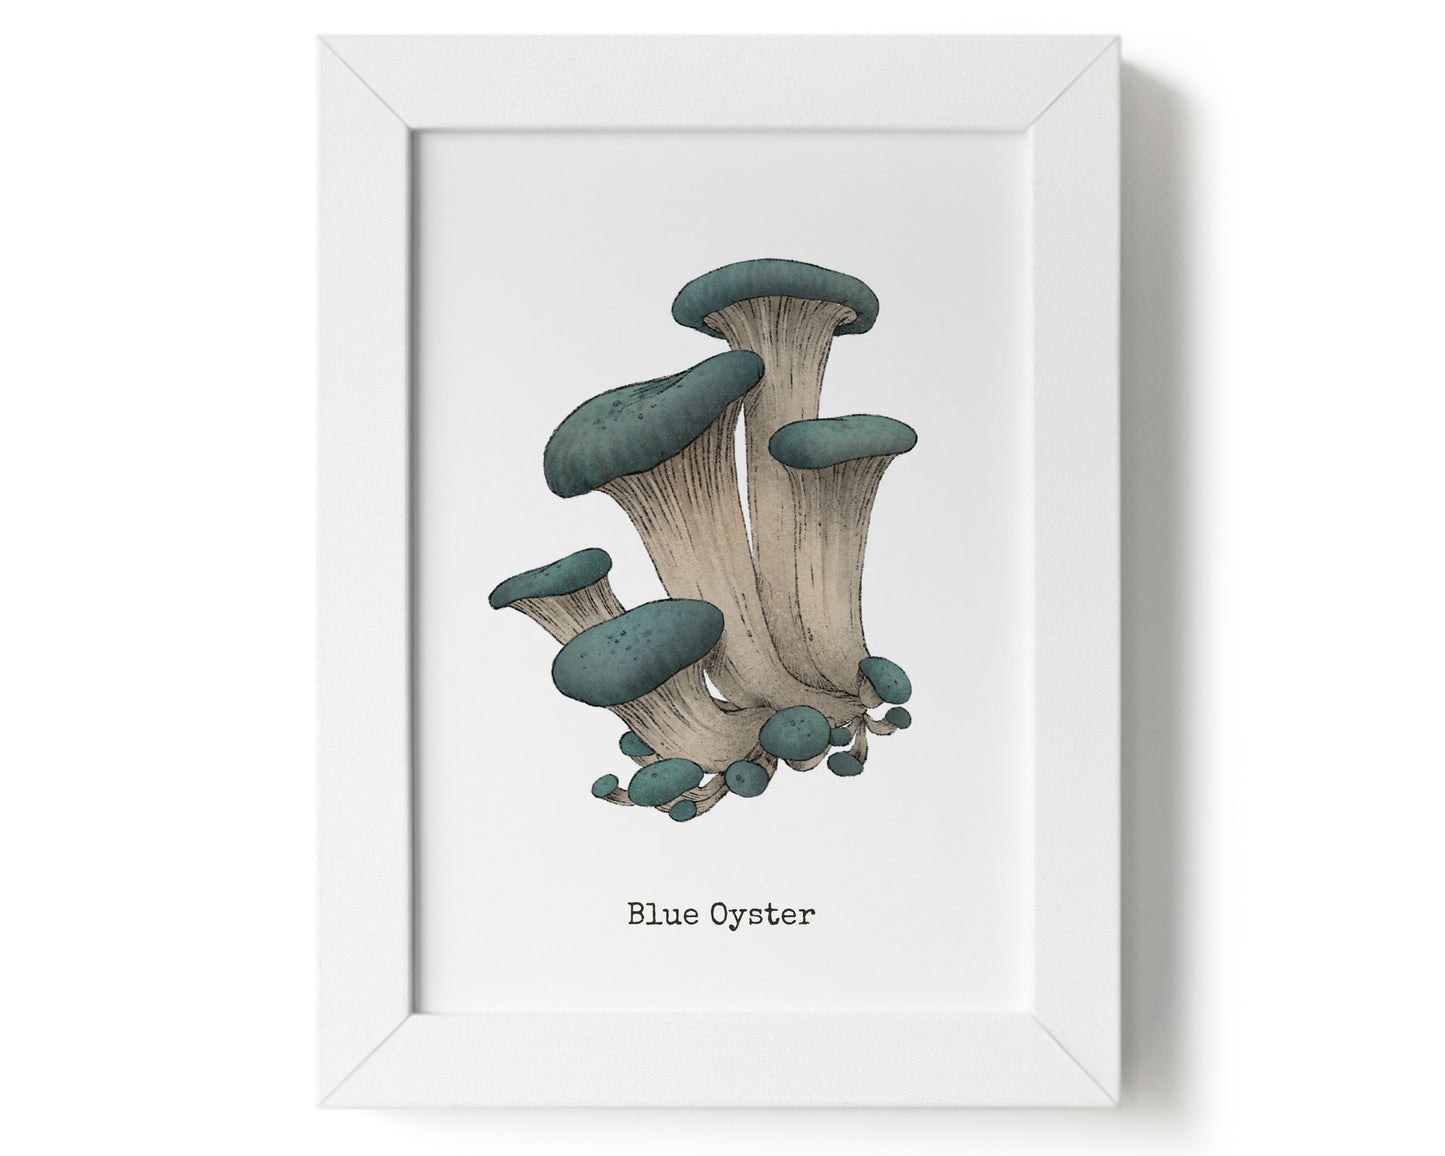 "Blue Oyster" by Catherine Hébert - Blue Oyster Mushroom Art Print - 5"x7" size